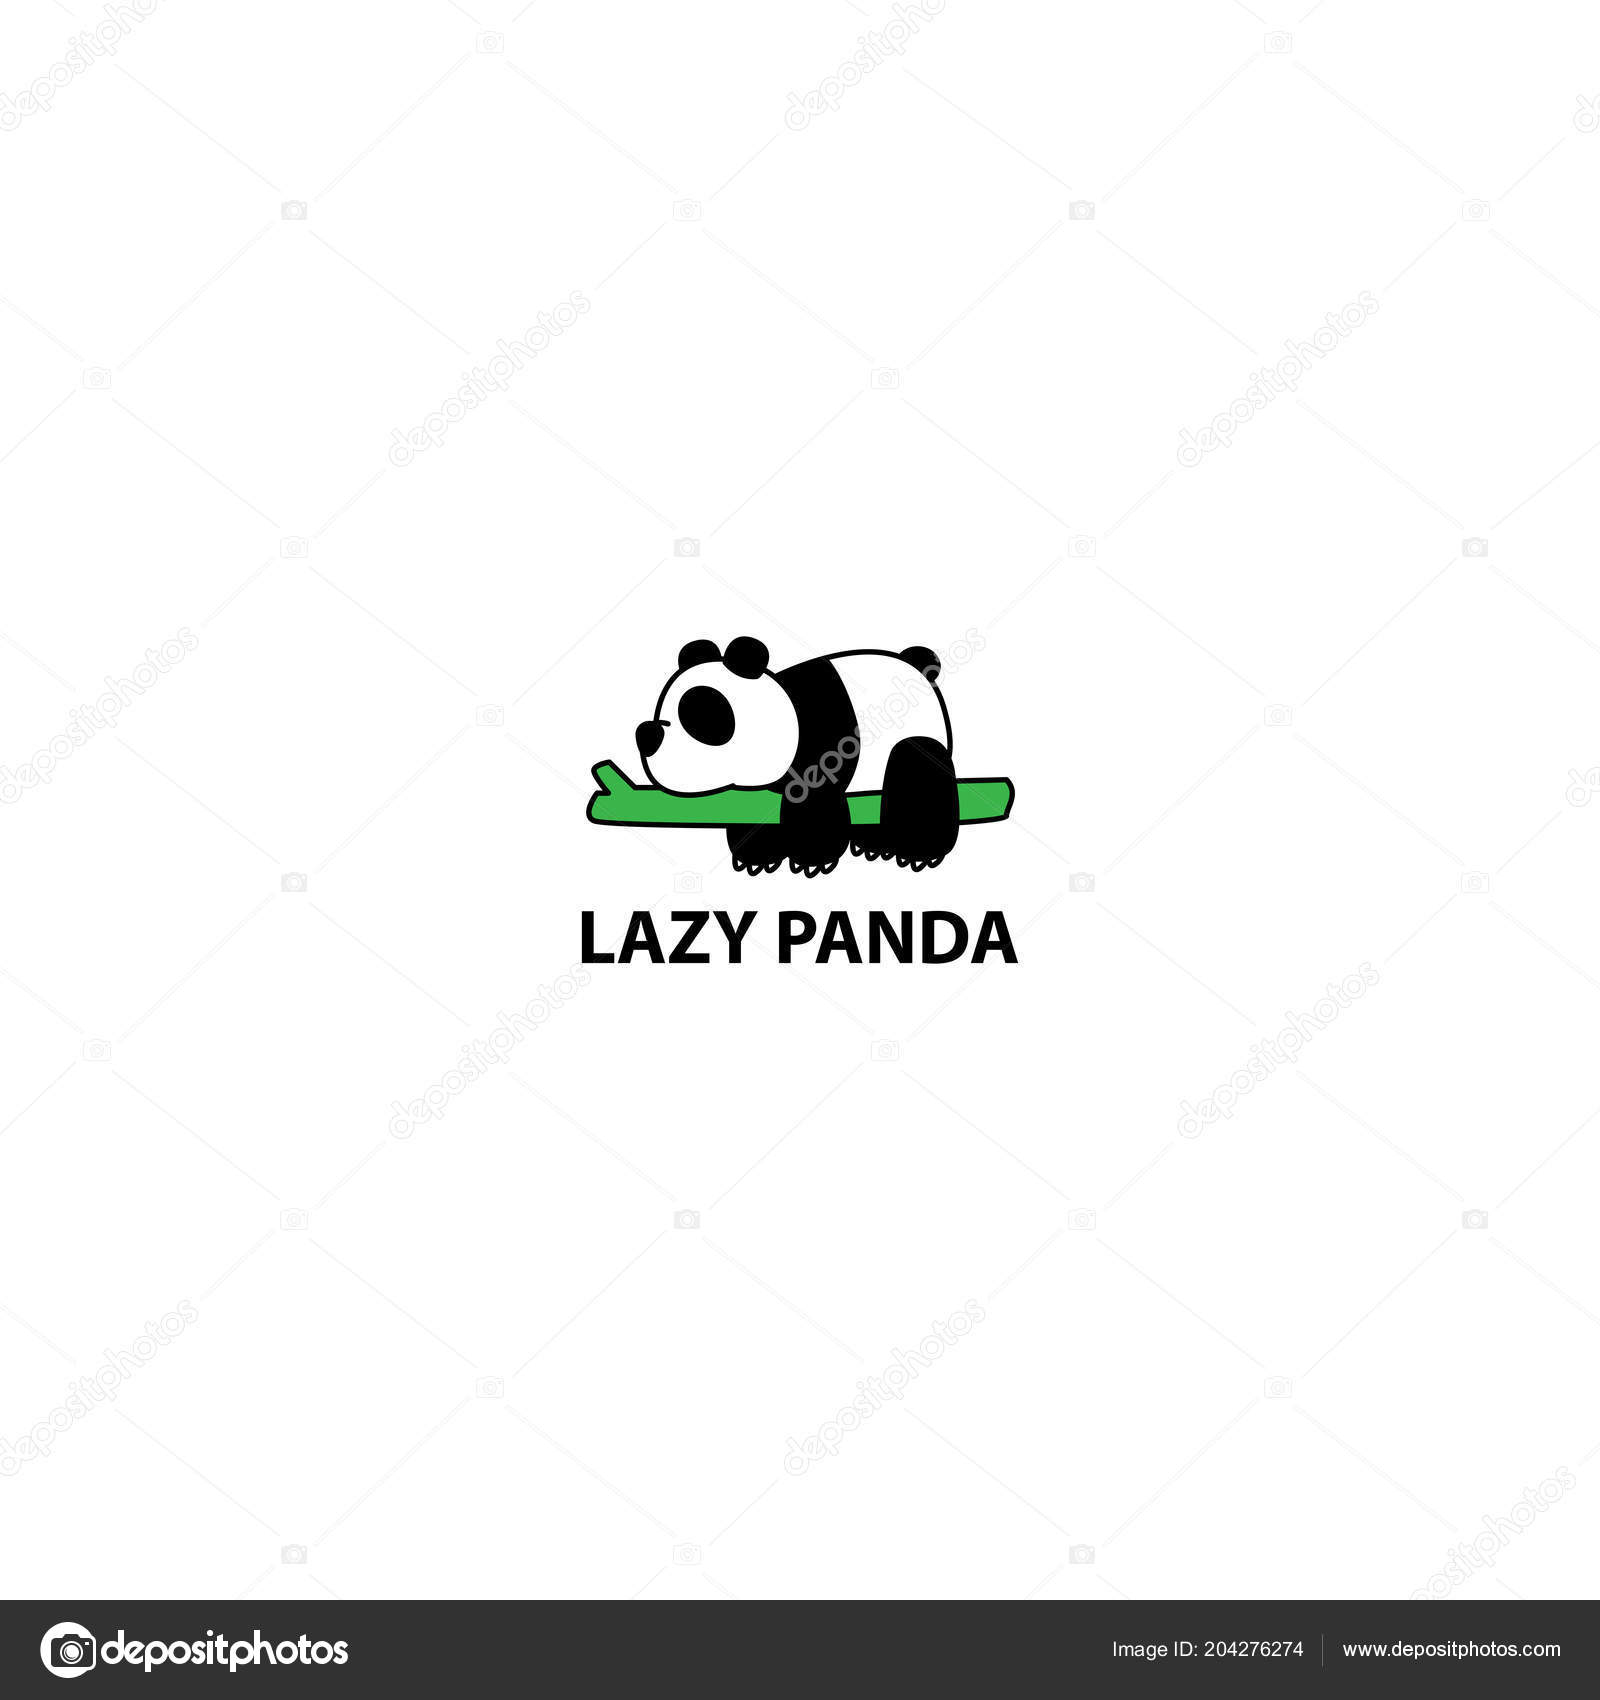 Premium Vector | Lazy panda sleeping icon